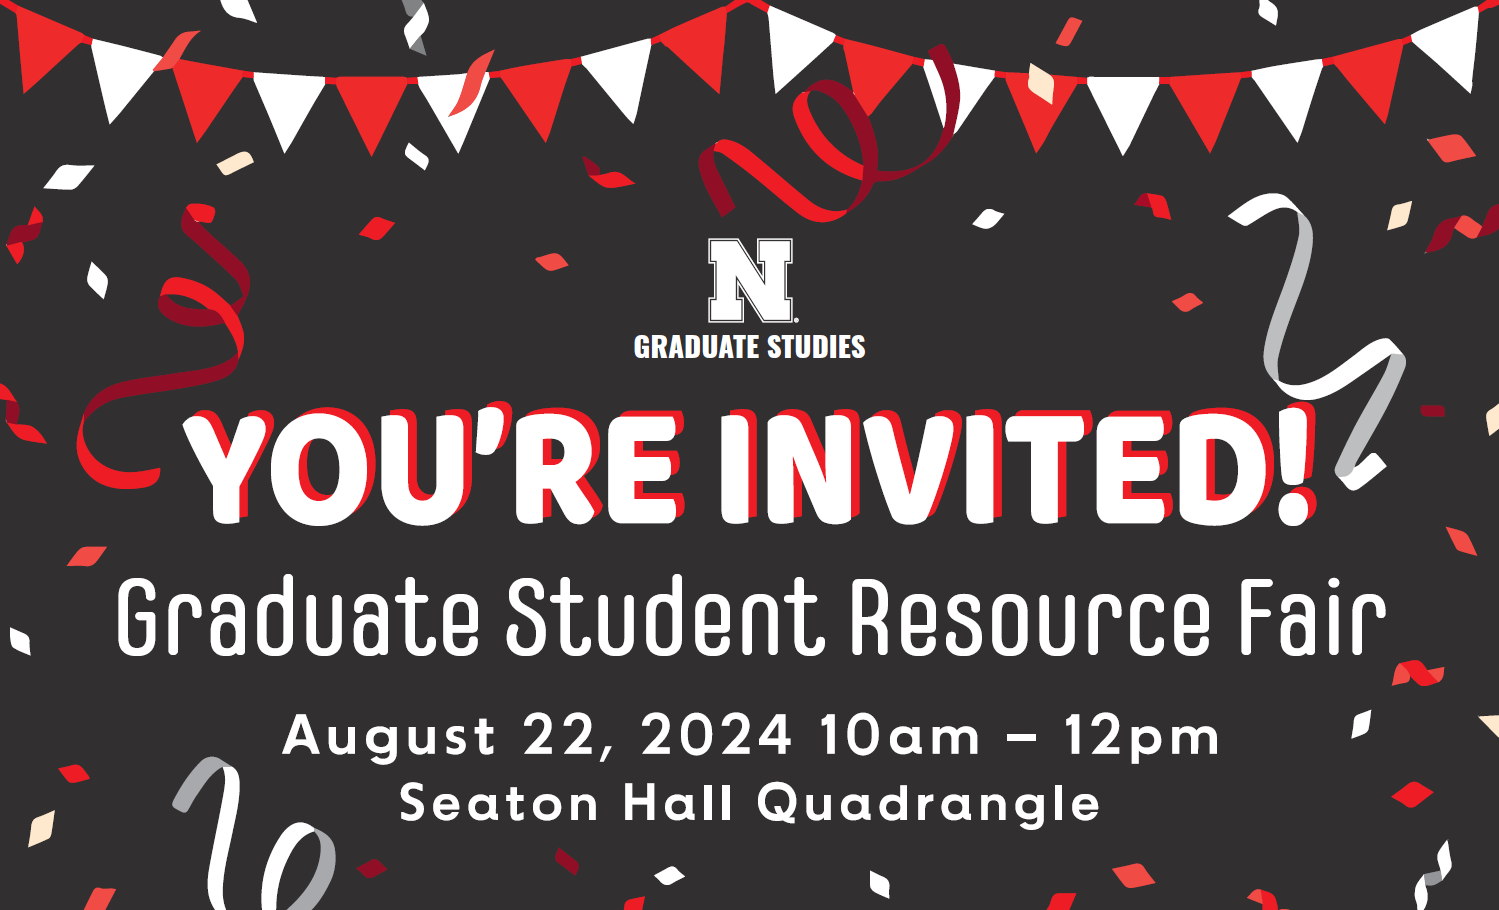 Graduate Student Welcome Resource Fair Invitation